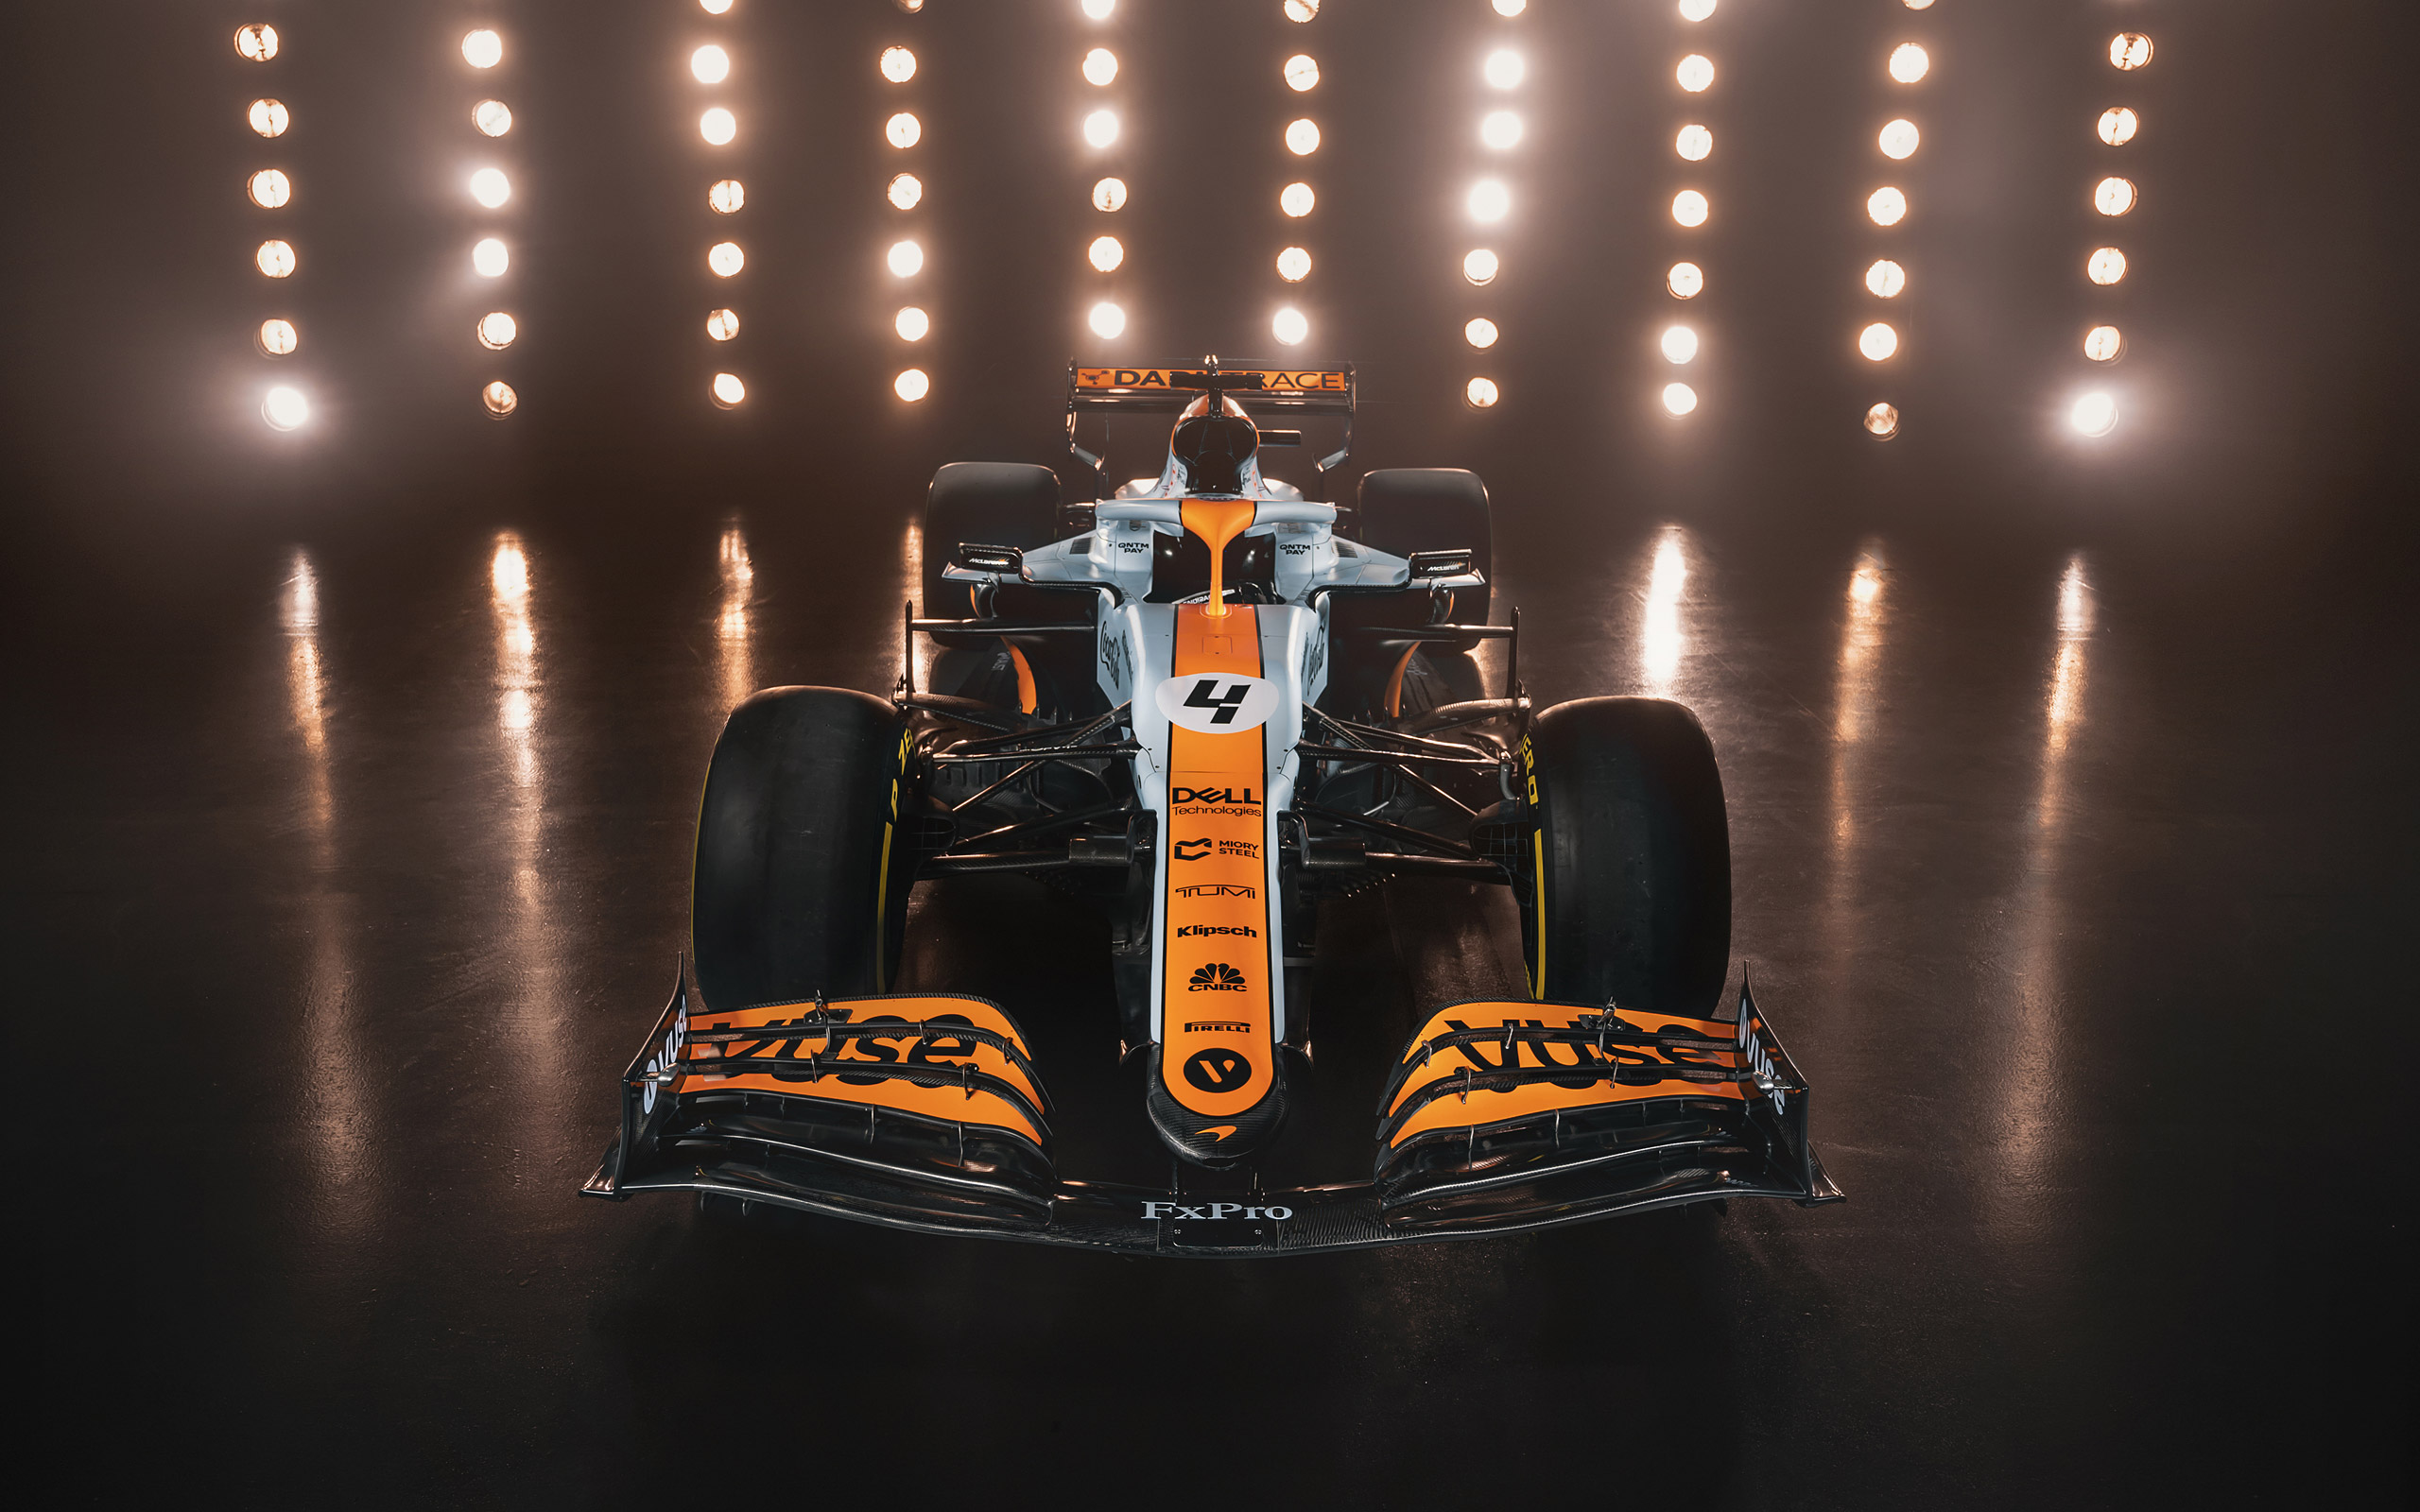  2021 McLaren MCL35M Wallpaper.